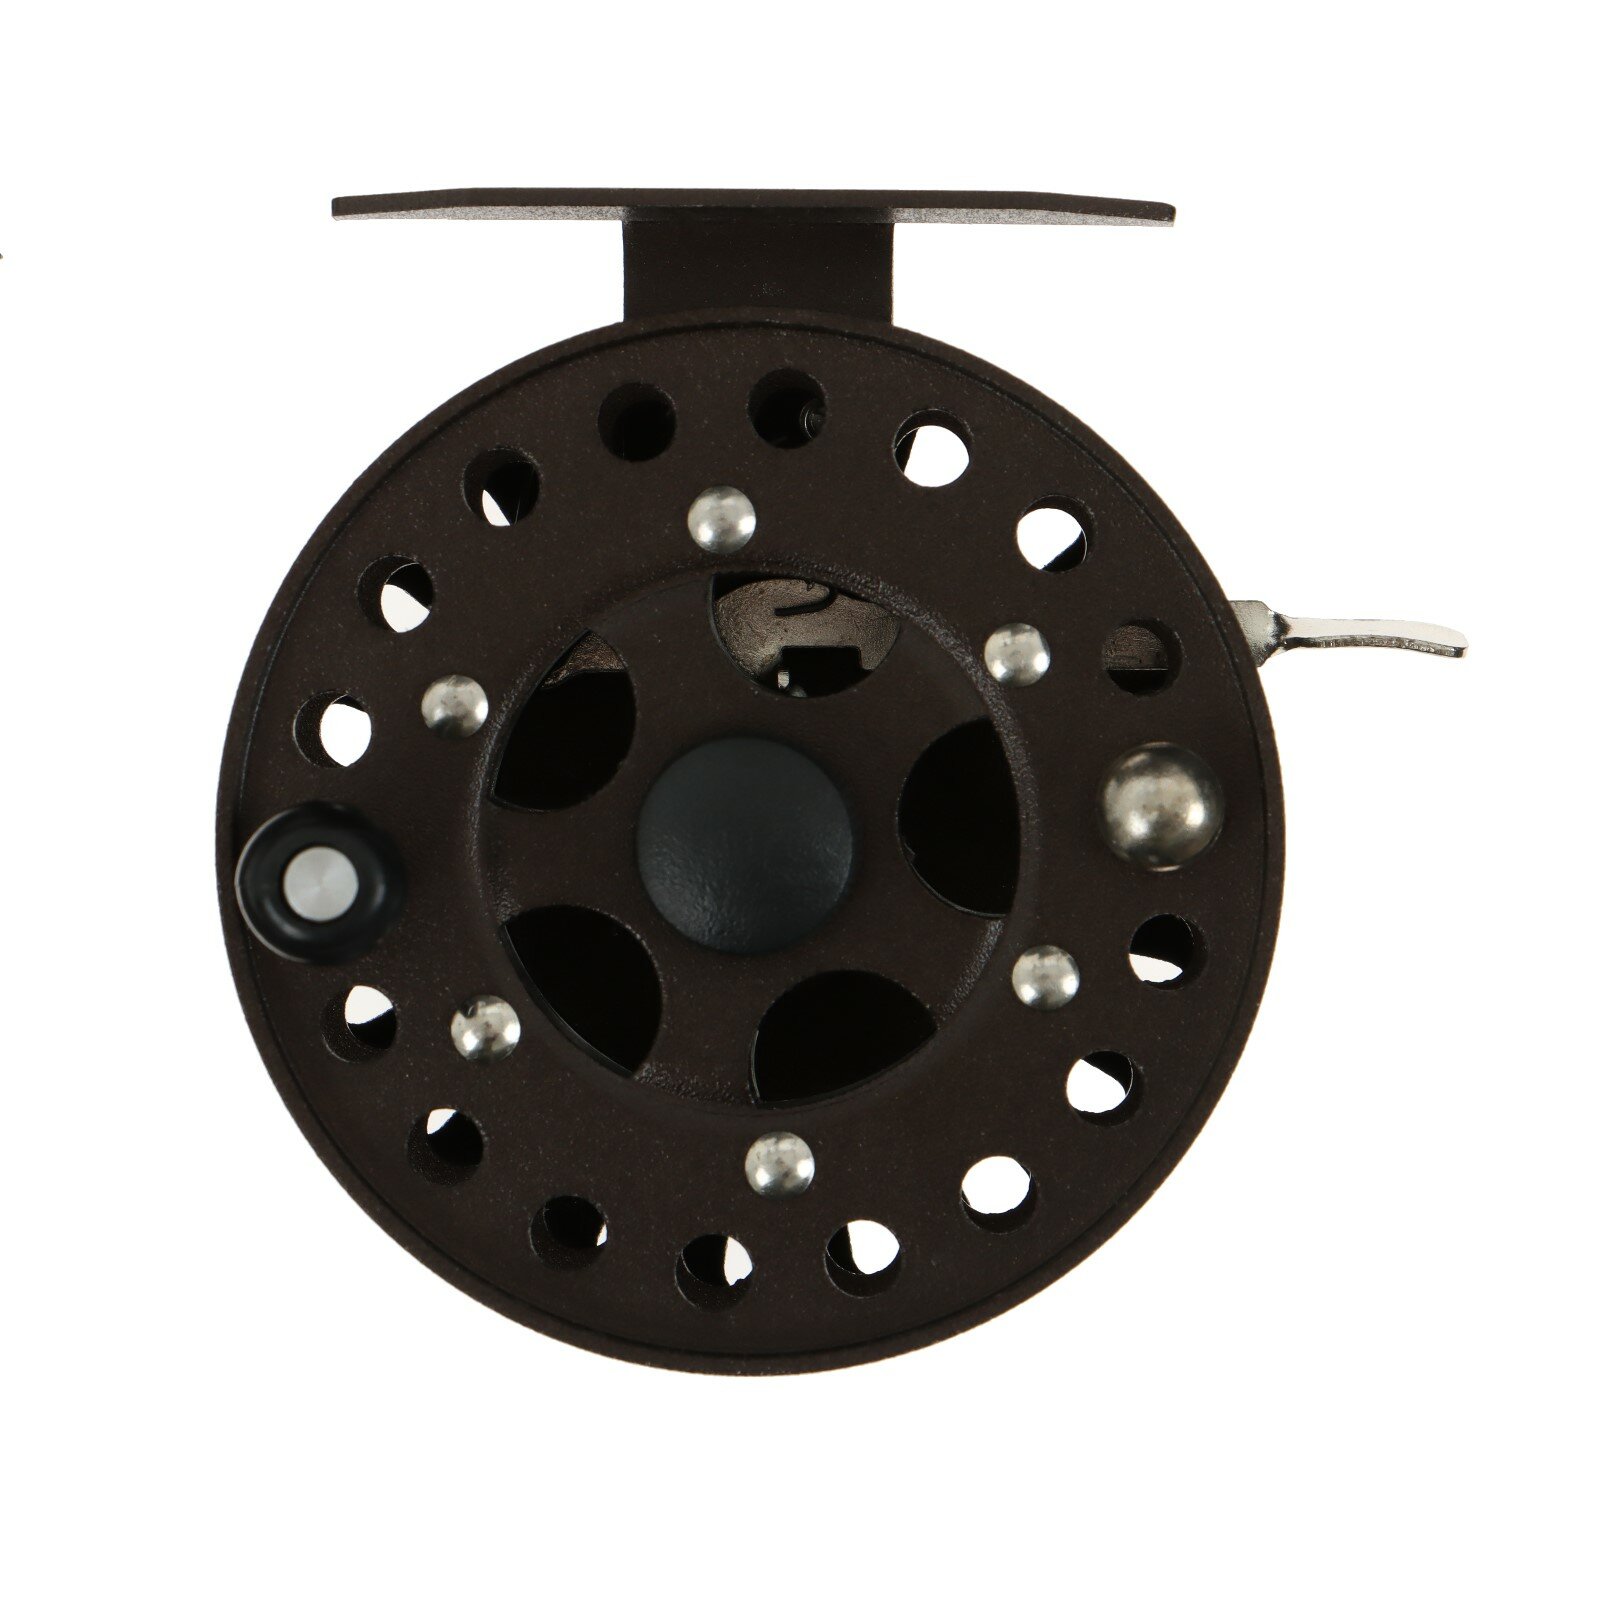 Катушка инерционная, металл, диаметр 7.5 см, цвет коричневый, HF75 9913263